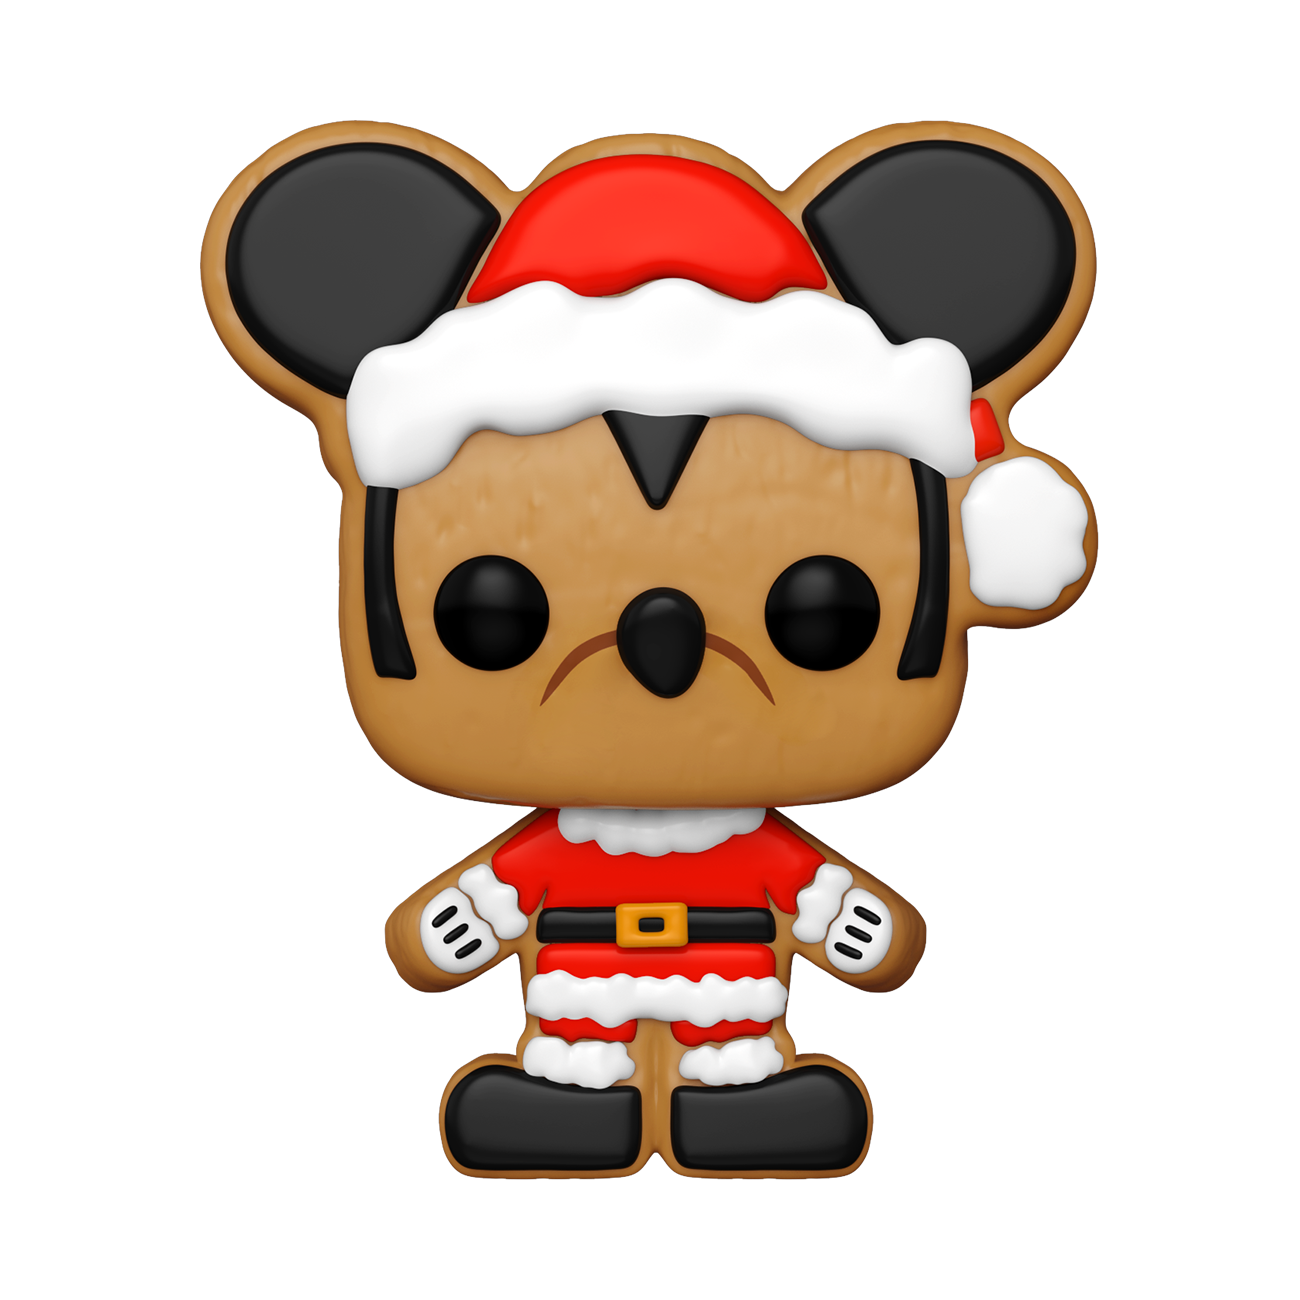 https://media.gamestop.com/i/gamestop/11203648/Funko-POP-Disney-Gingerbread-Mickey-Mouse-3.74-in-Vinyl-Figure?$pdp$